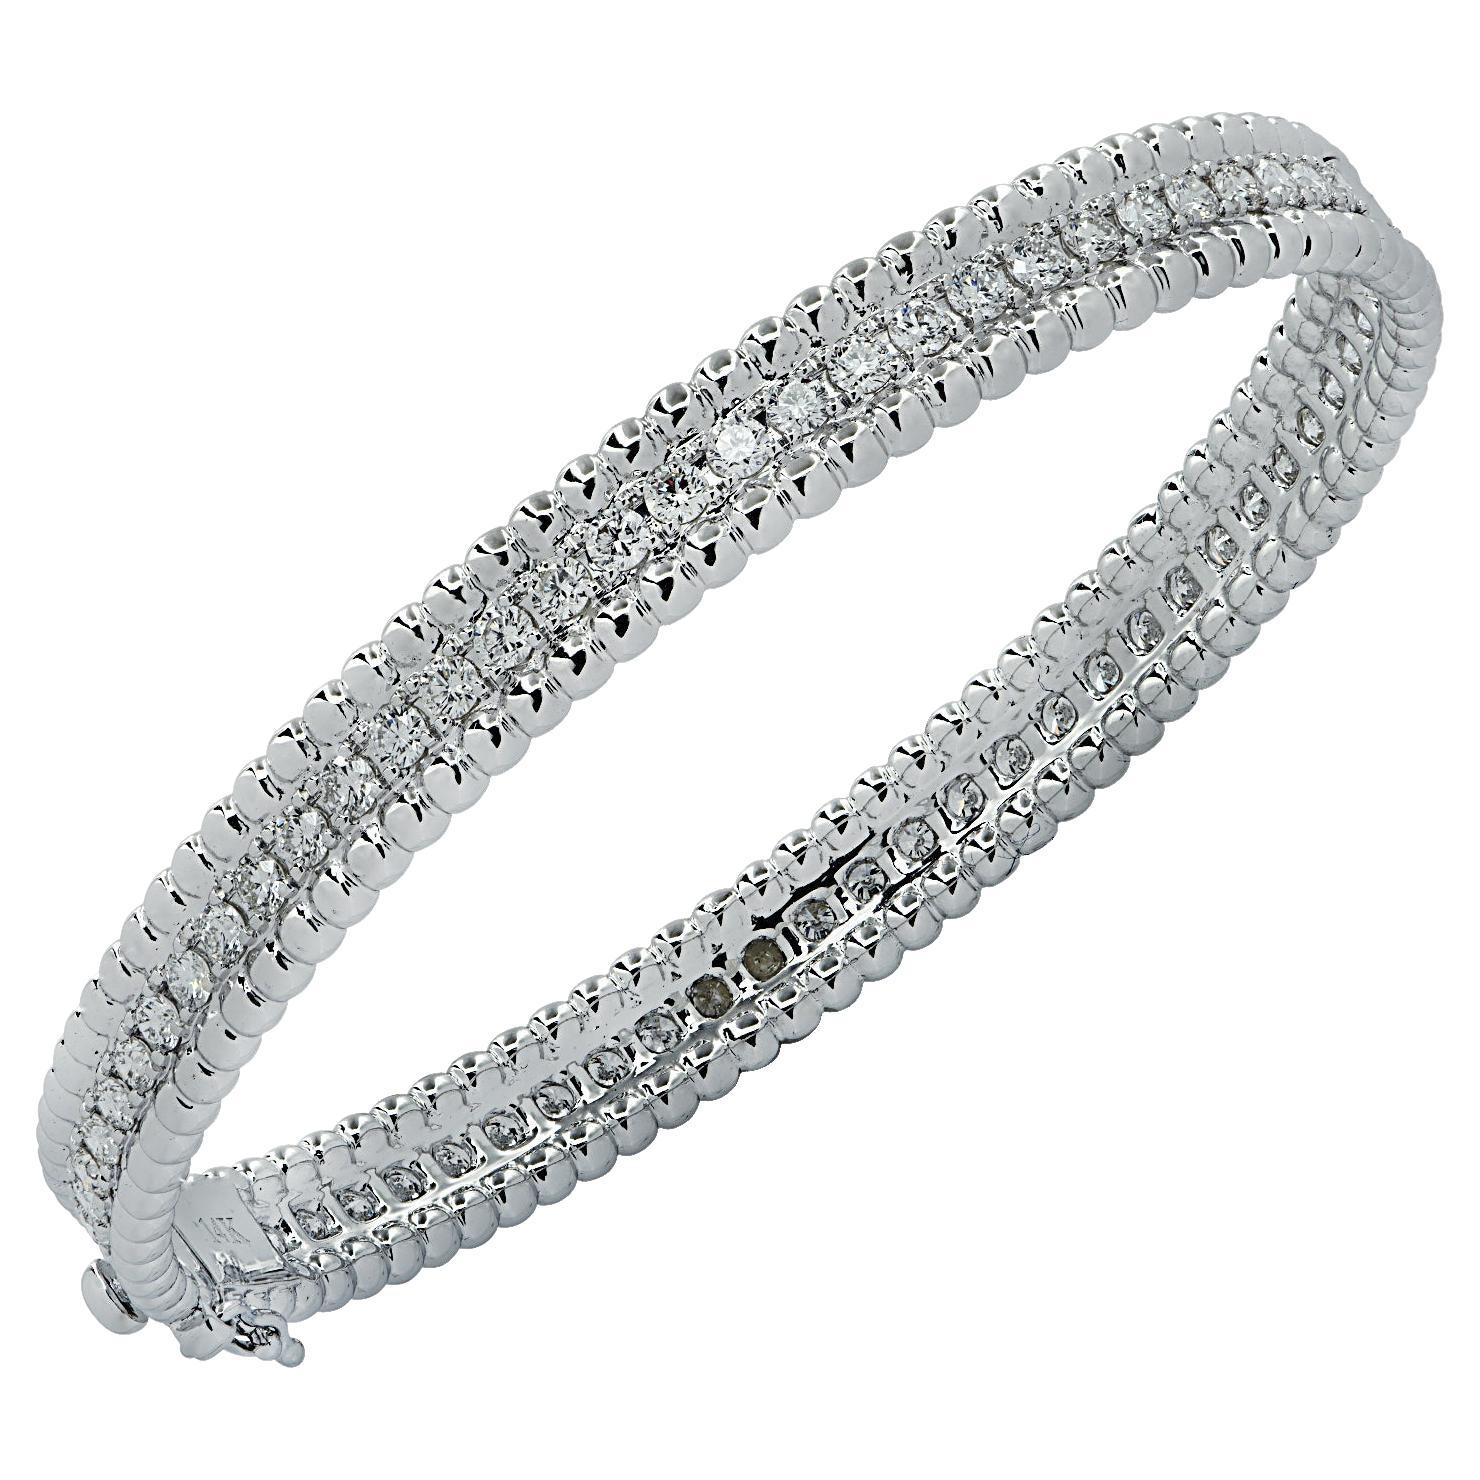 Vivid Diamonds 2.79 Carat Diamond Bangle Bracelet